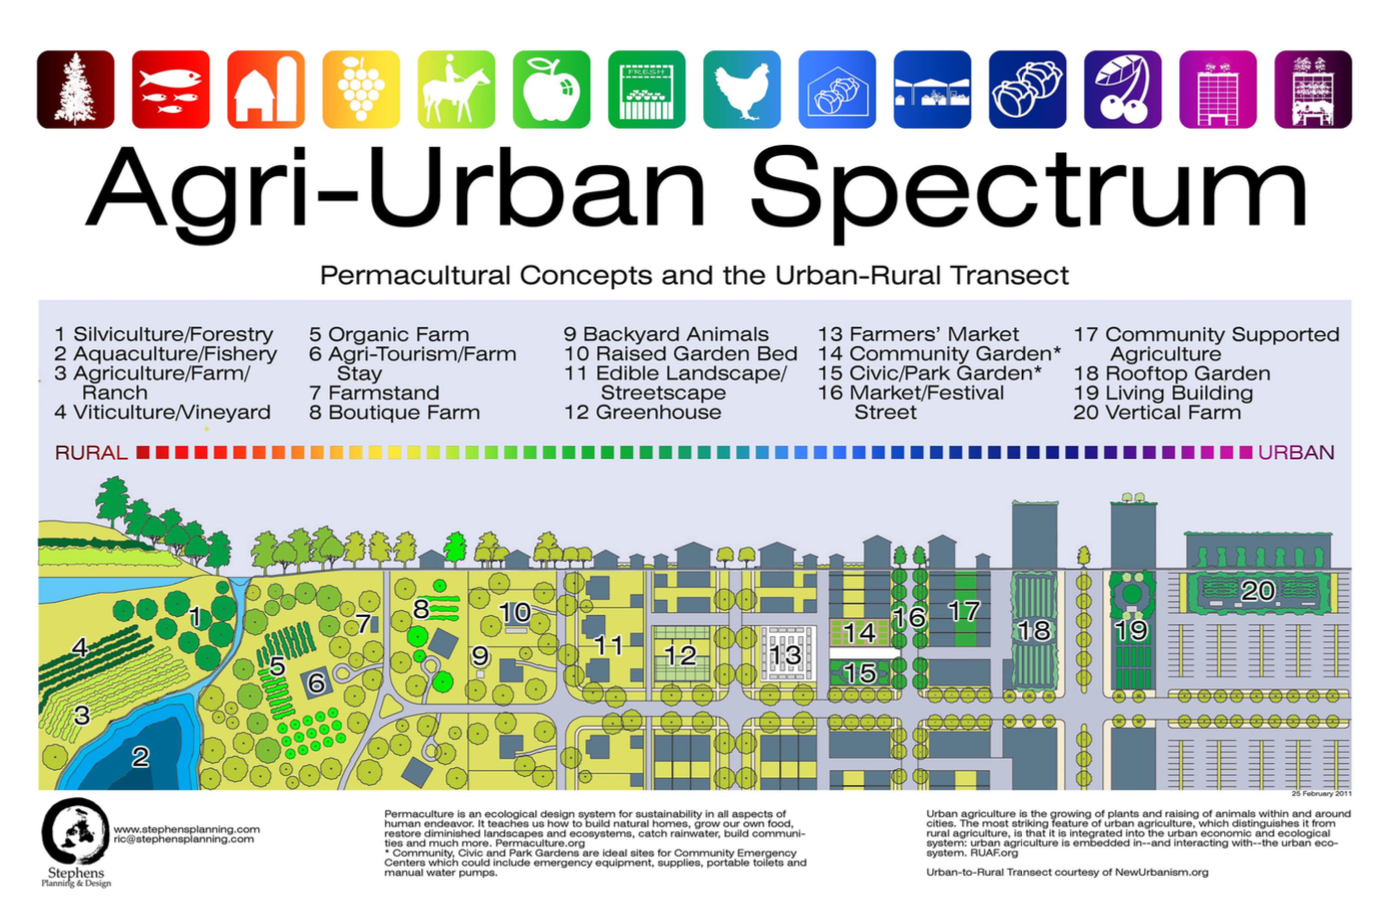 http://www.stephensplanning.com/agri_urban_spectrum.pdf